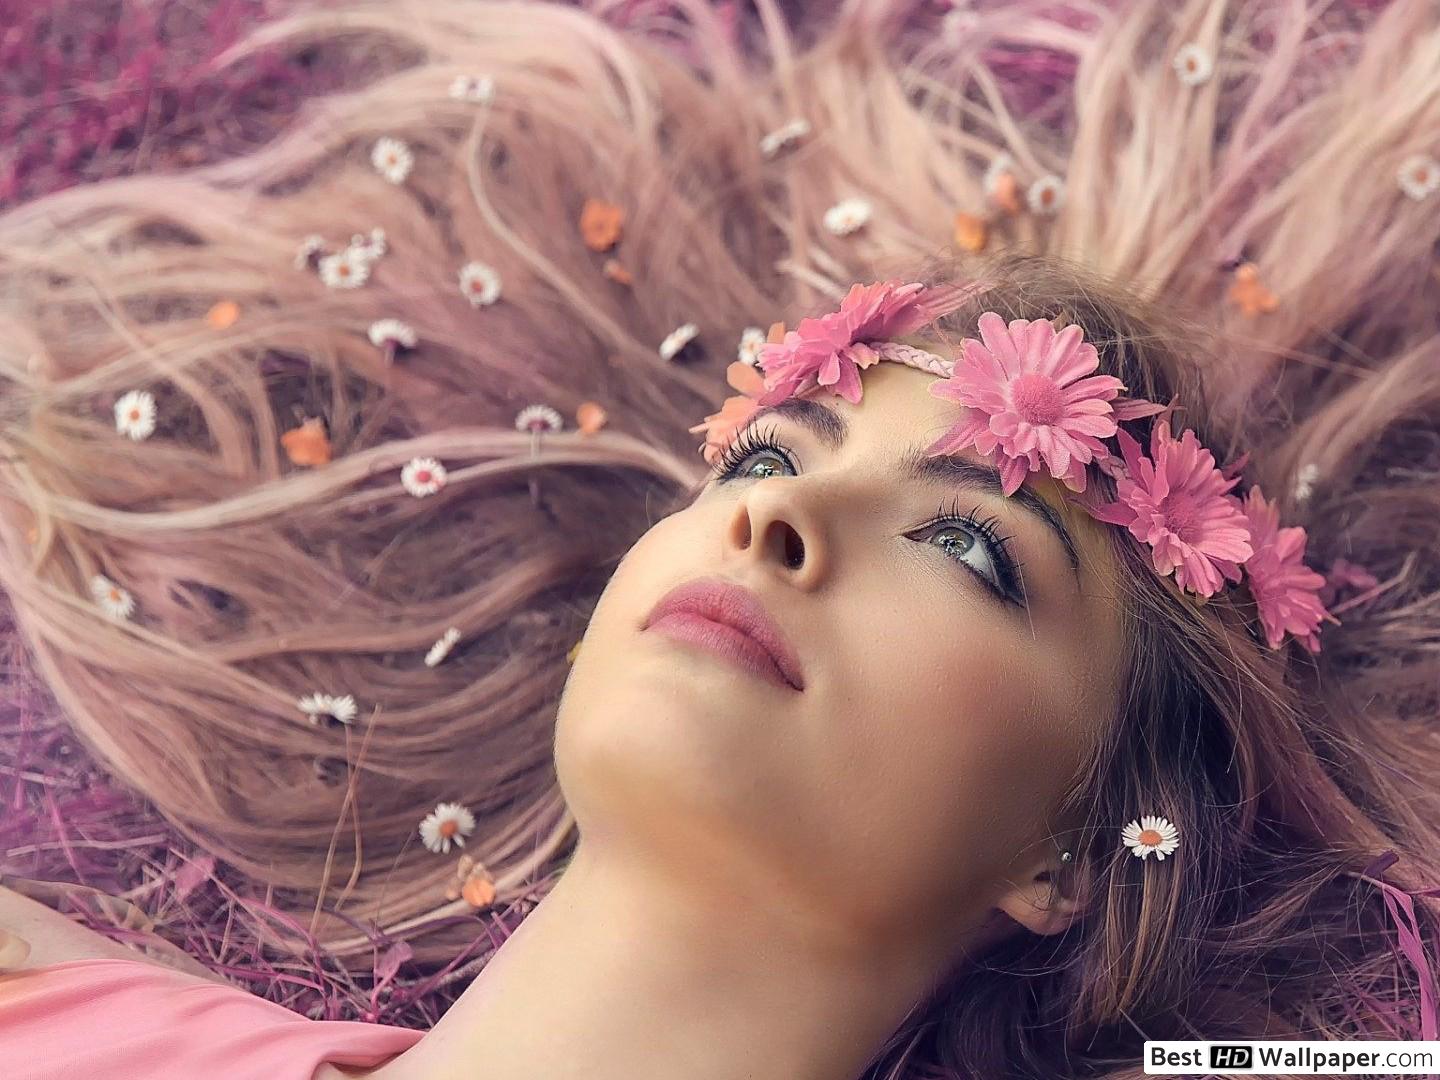 Beautiful girl in a wreath of flowers HD wallpaper download